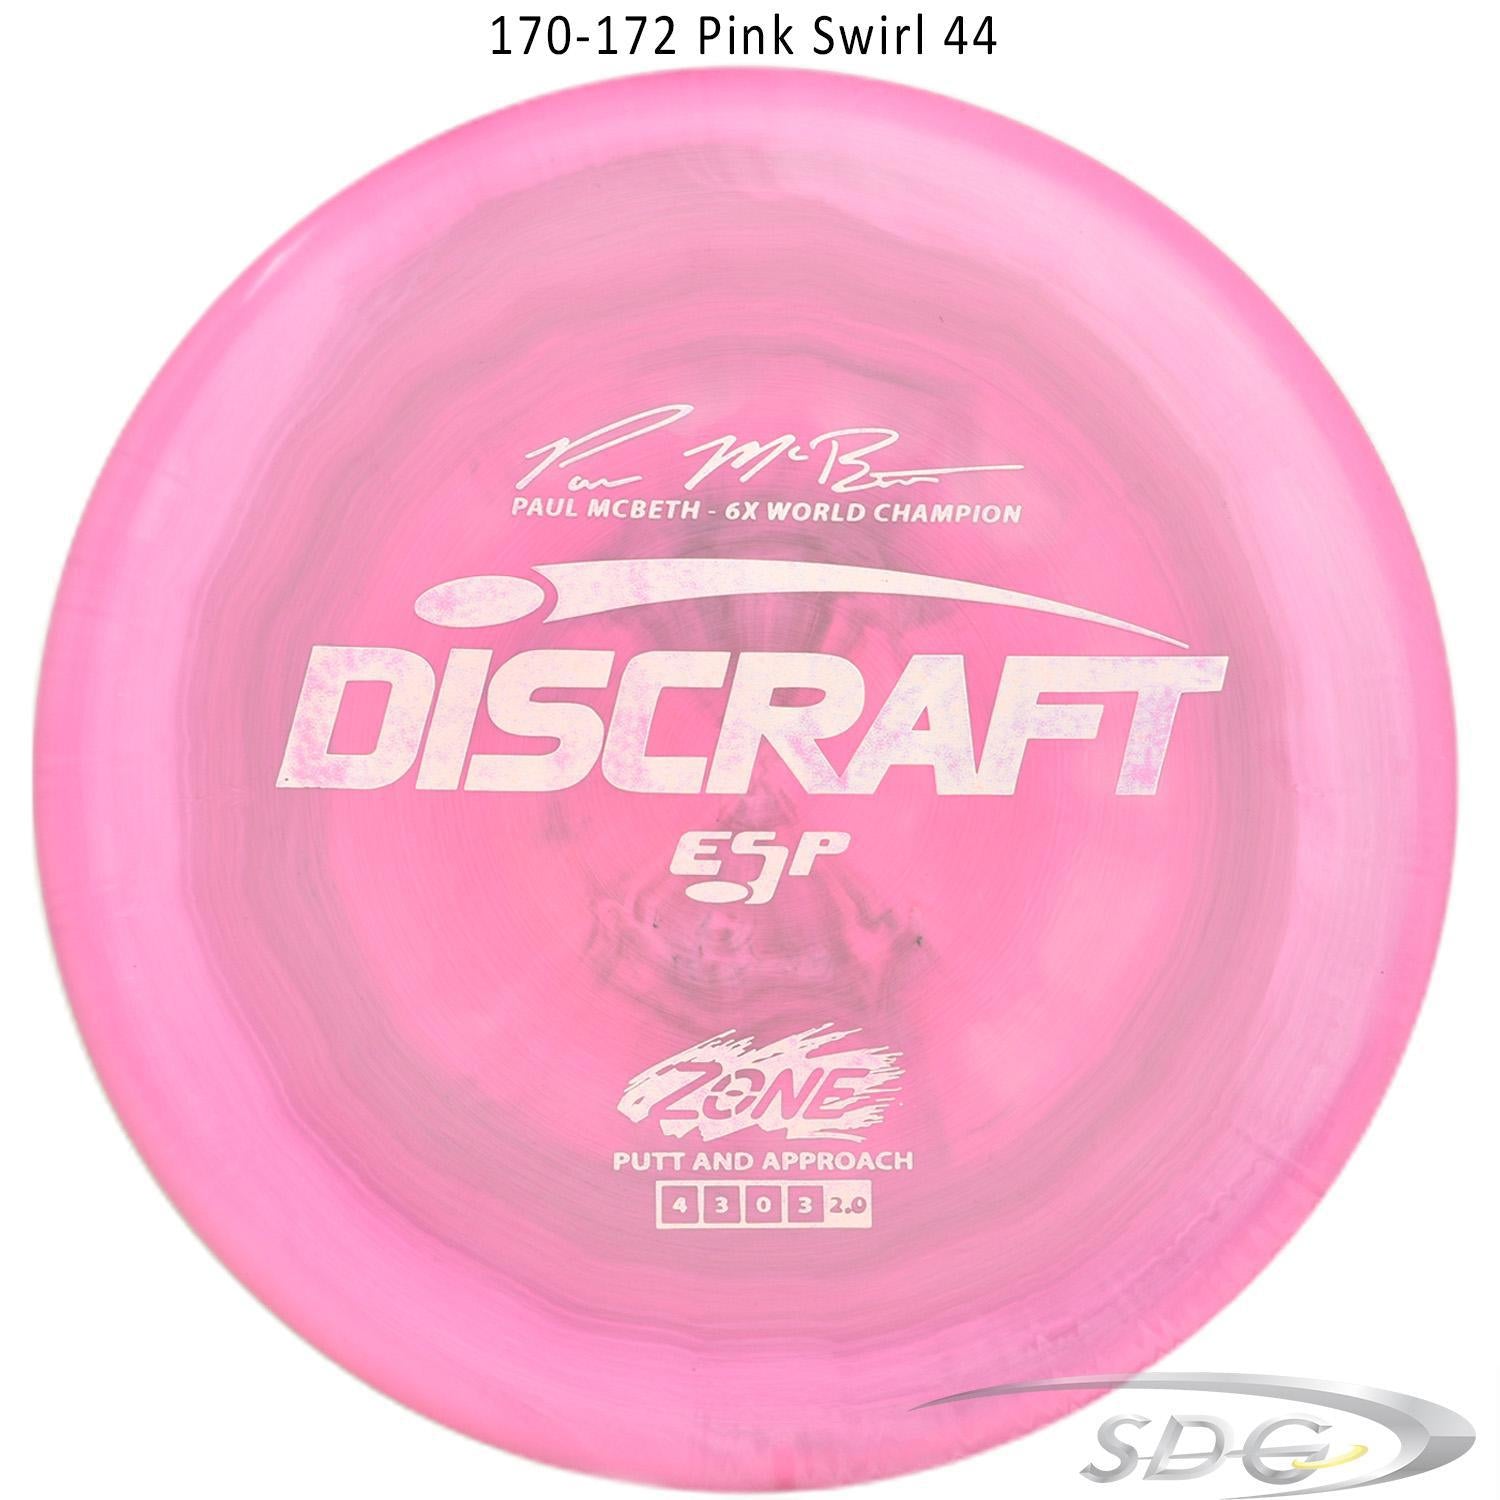 discraft-esp-zone-6x-paul-mcbeth-signature-series-disc-golf-putter-172-170-weights 170-172 Pink Swirl 44 